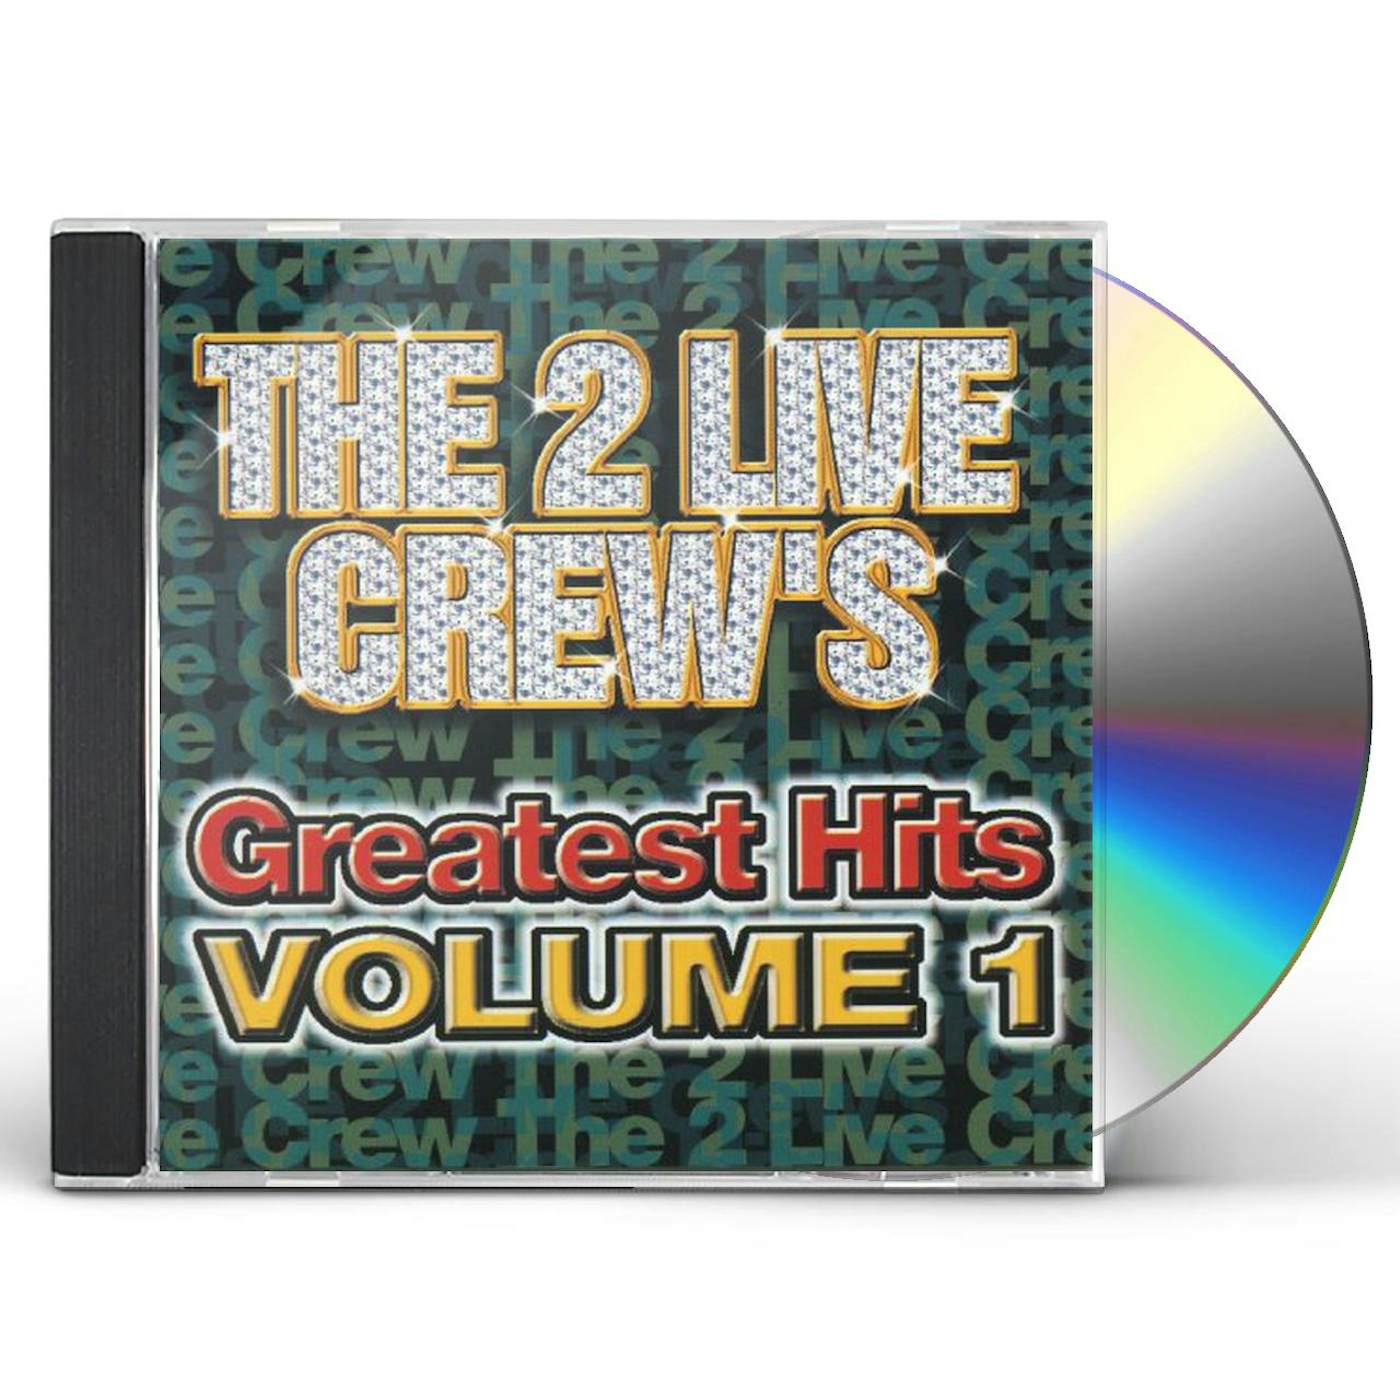 Whodini - Greatest Hits CD